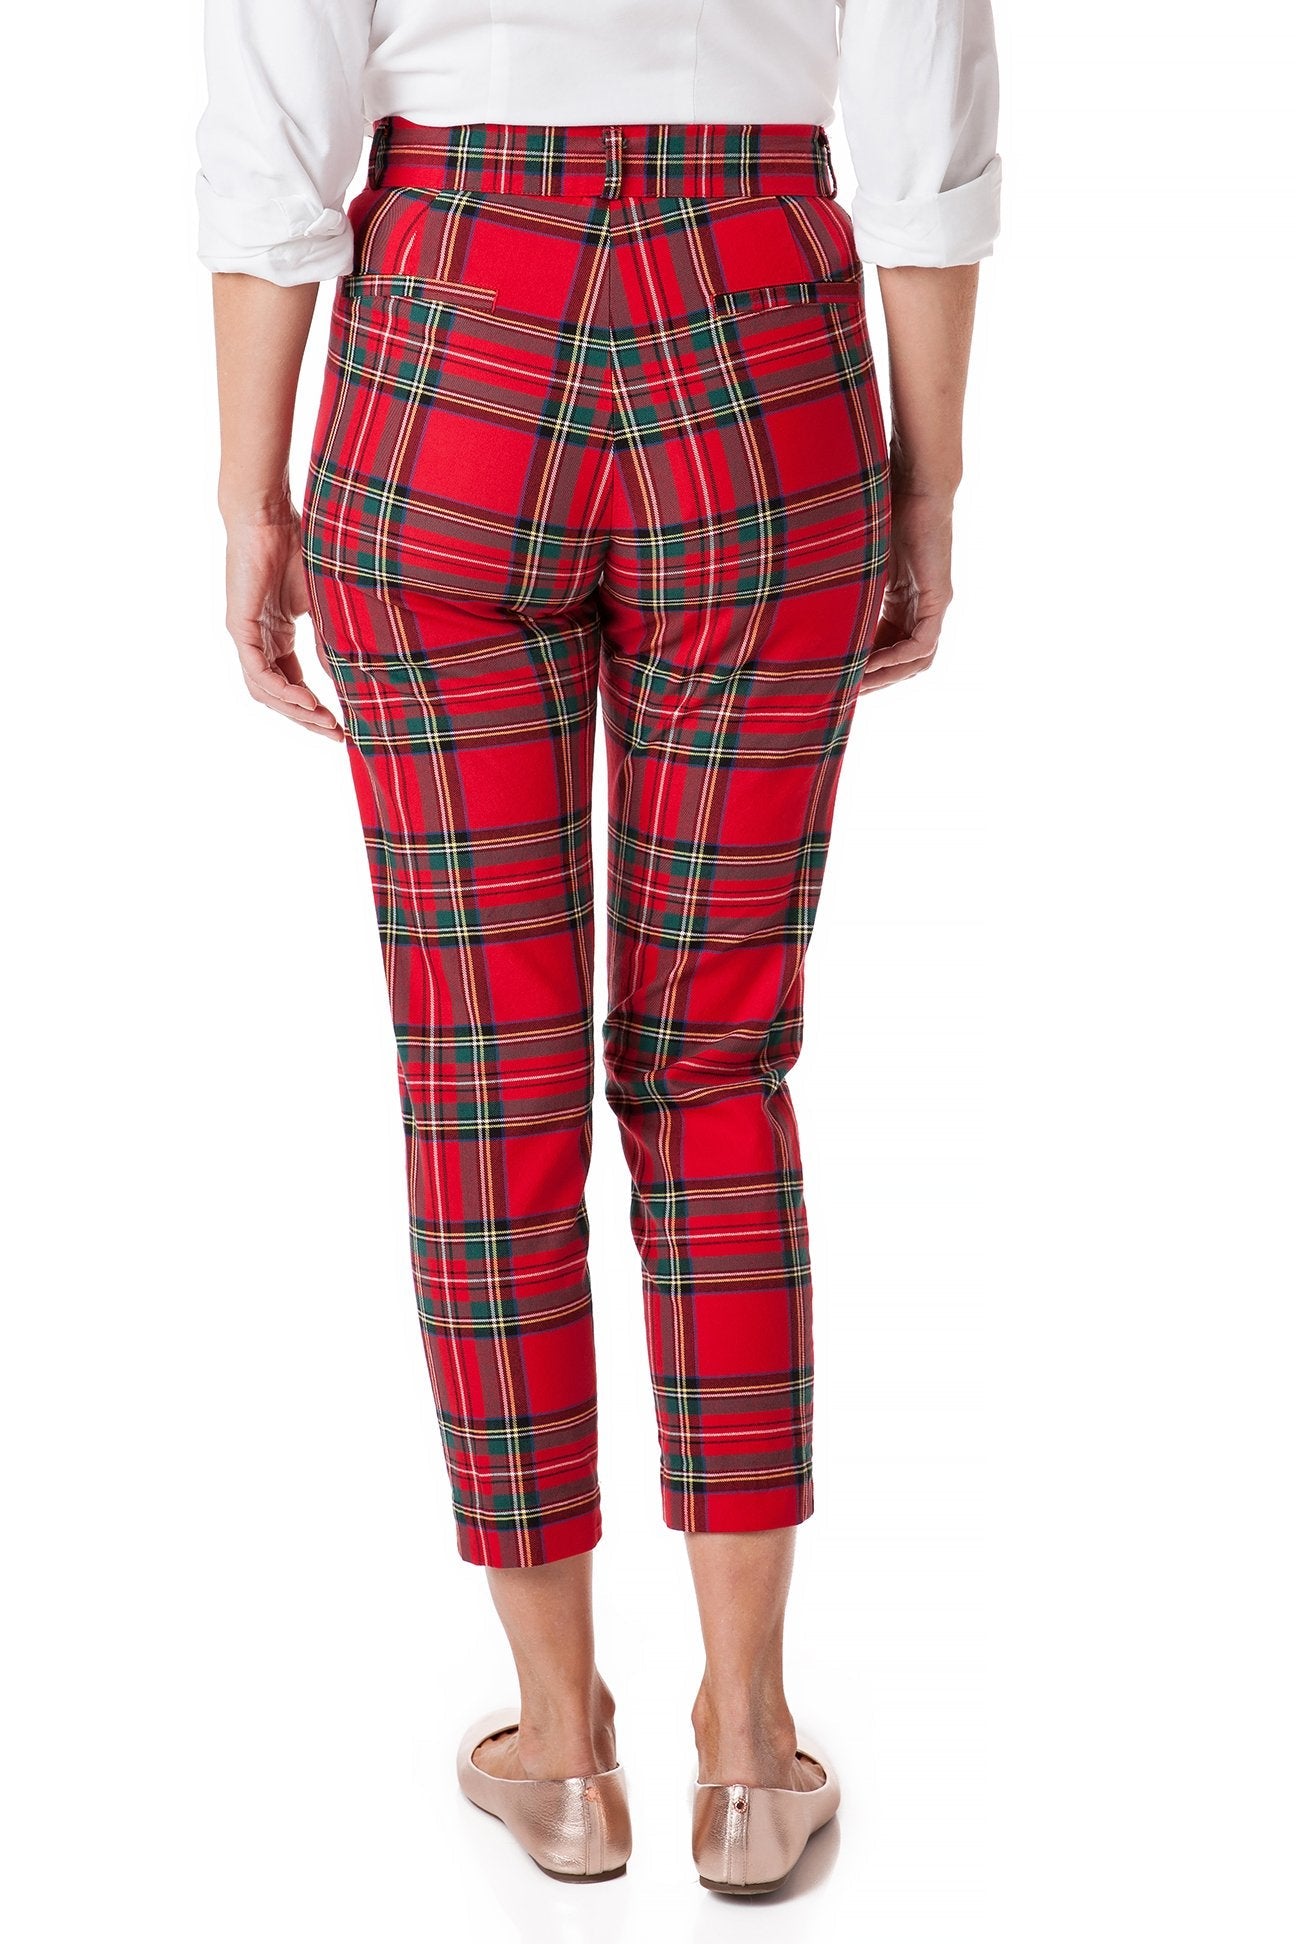 WOMENS HIGH WAIST Tapered Tartan Check Capri Pants/Trousers 6 8 10 12 14 16  18 £29.95 - PicClick UK